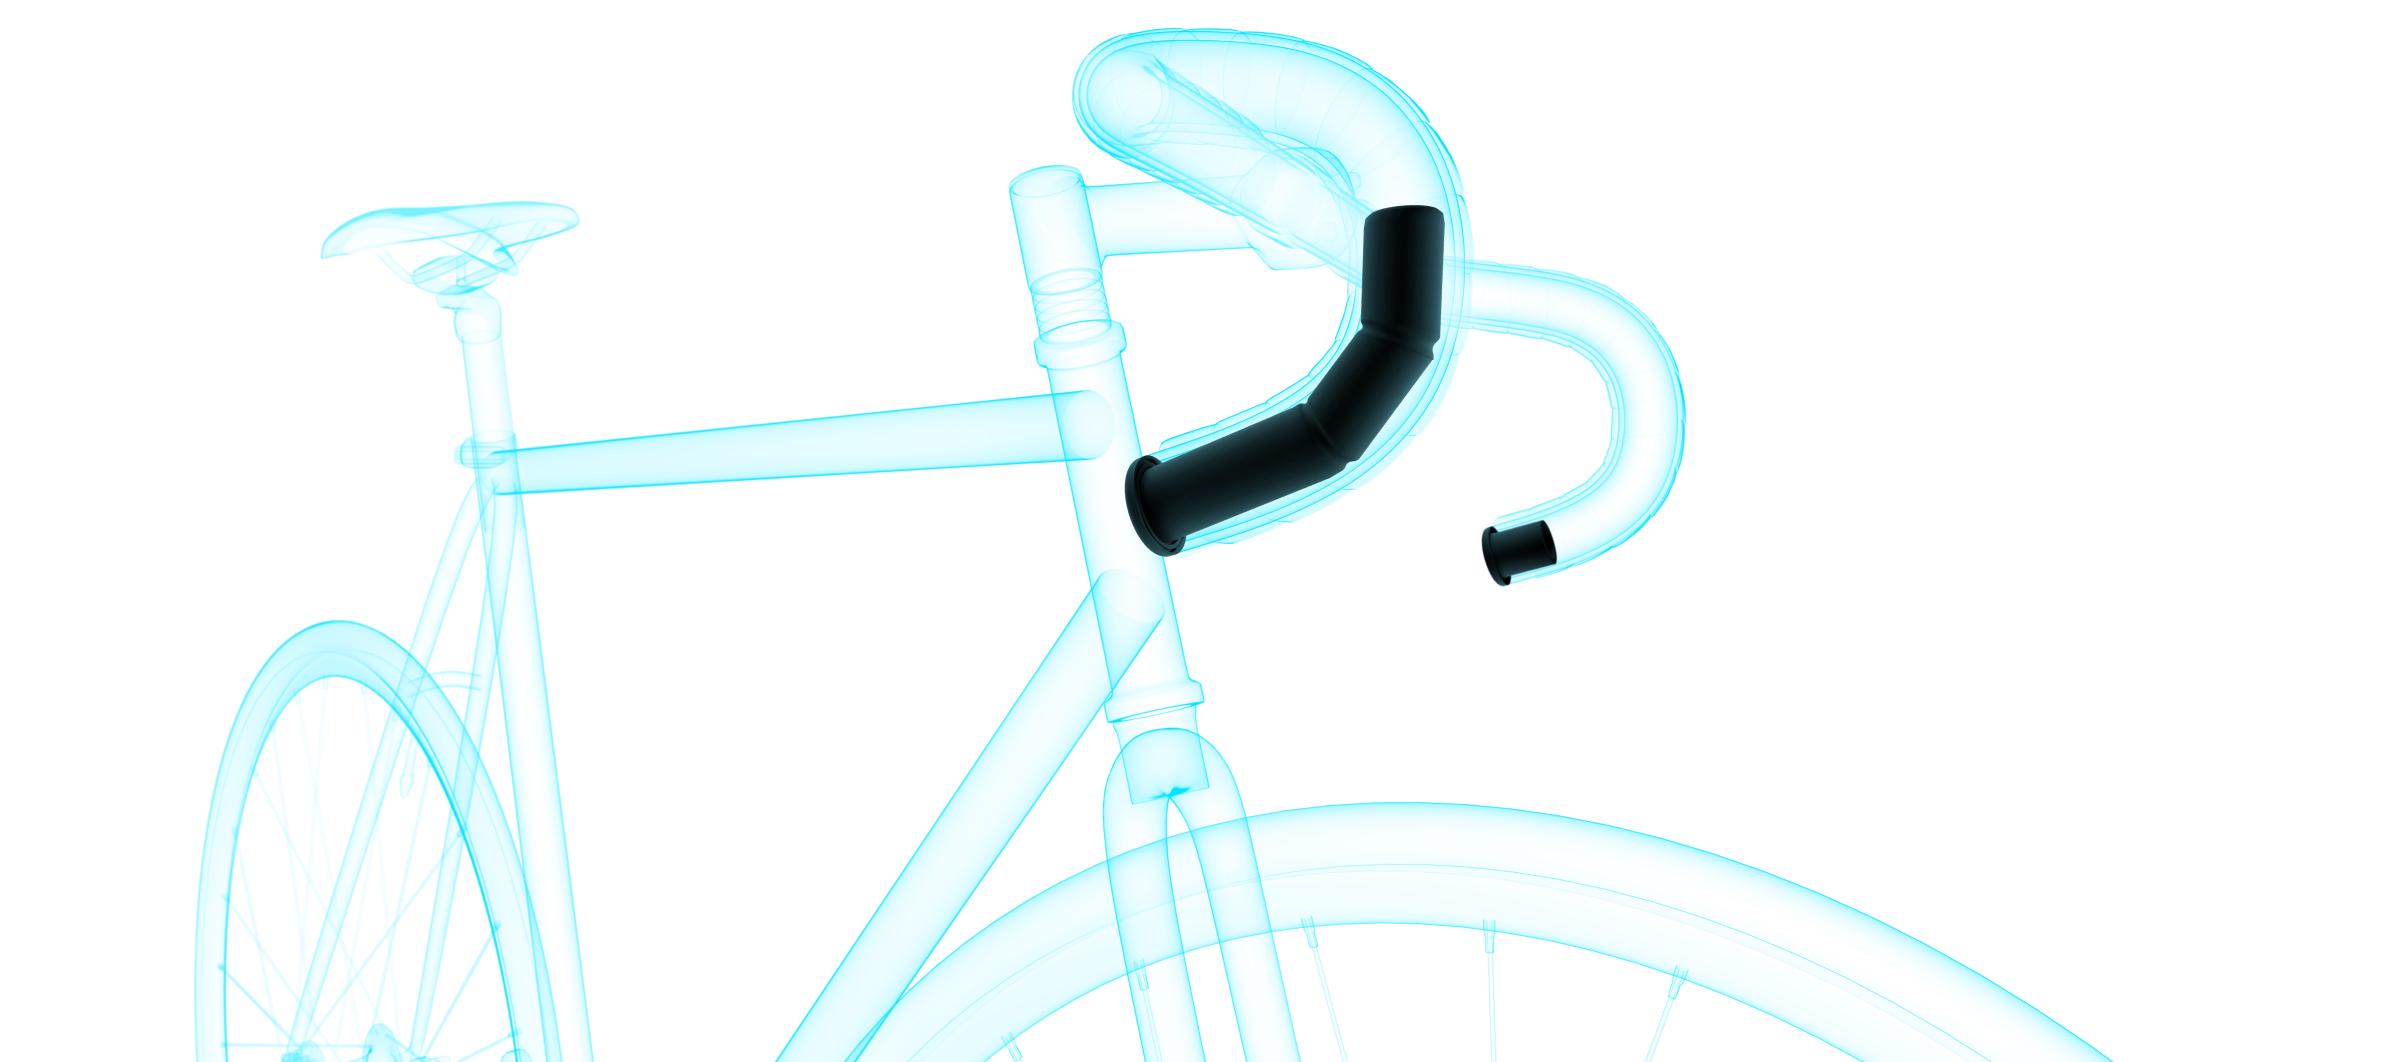 Bike gps tracker android